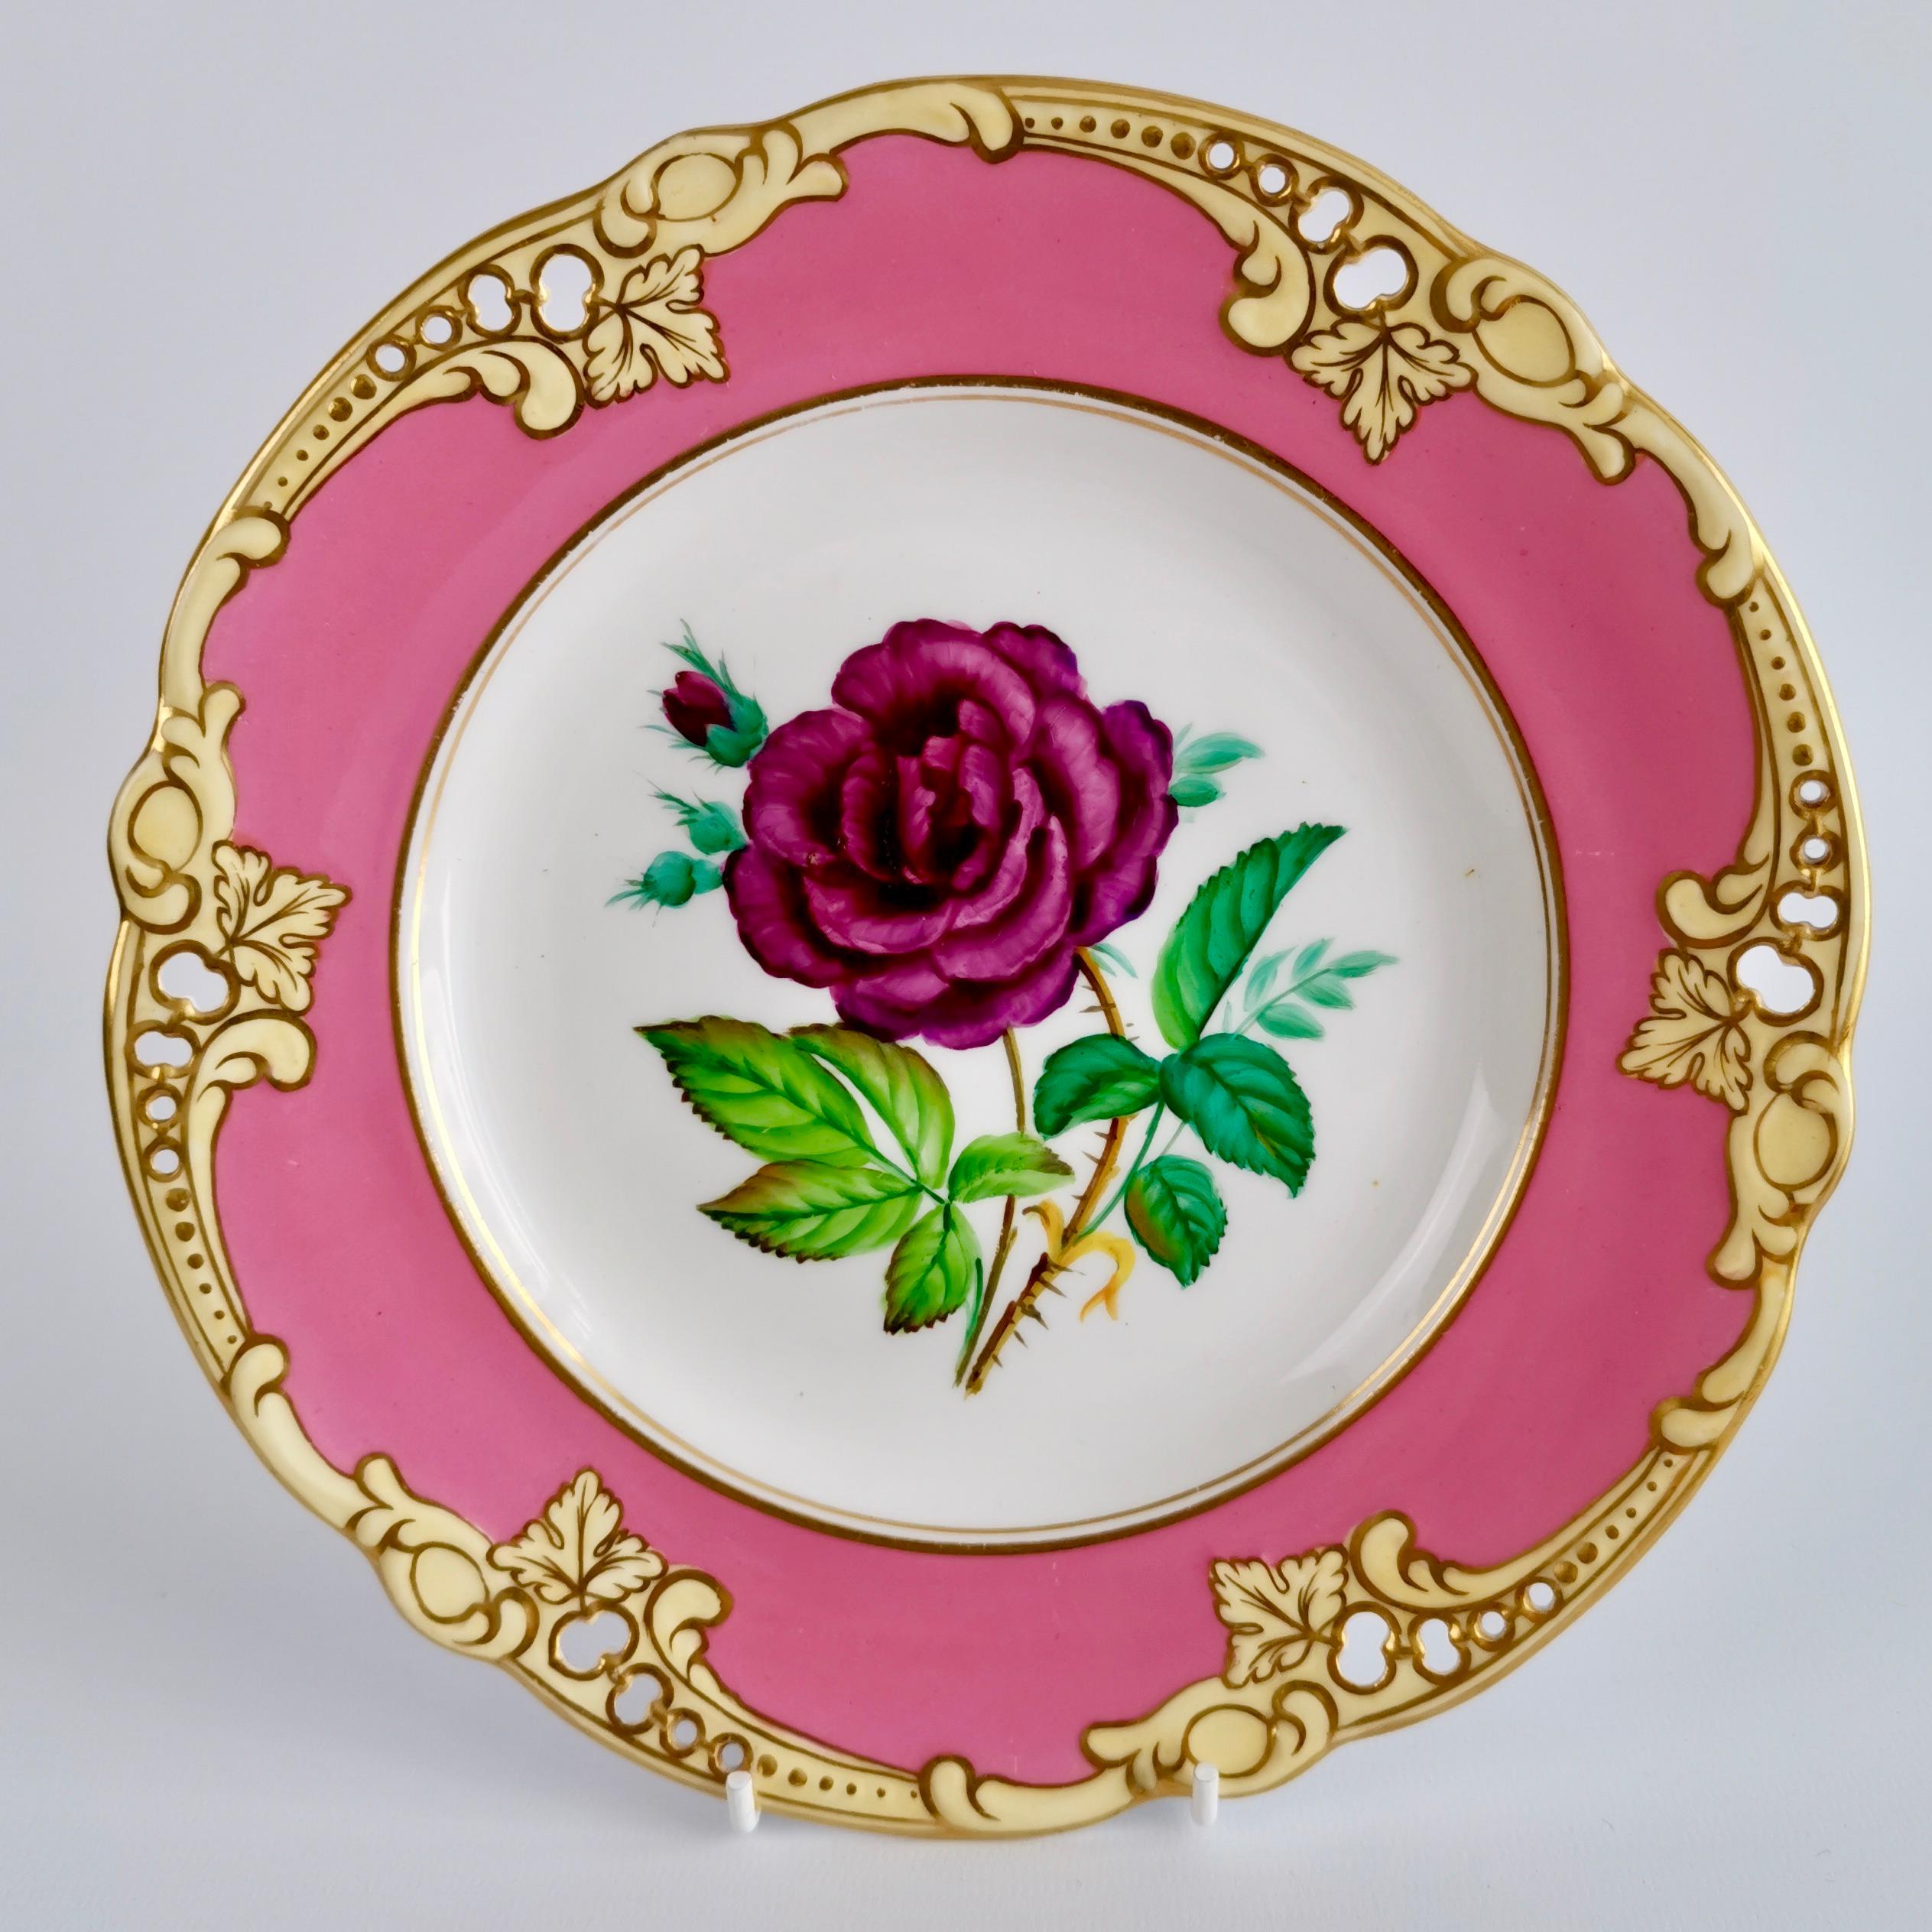 Brown Westhead & Moore Porcelain Dessert Service, Hot Pink Botanical, circa 1860 5